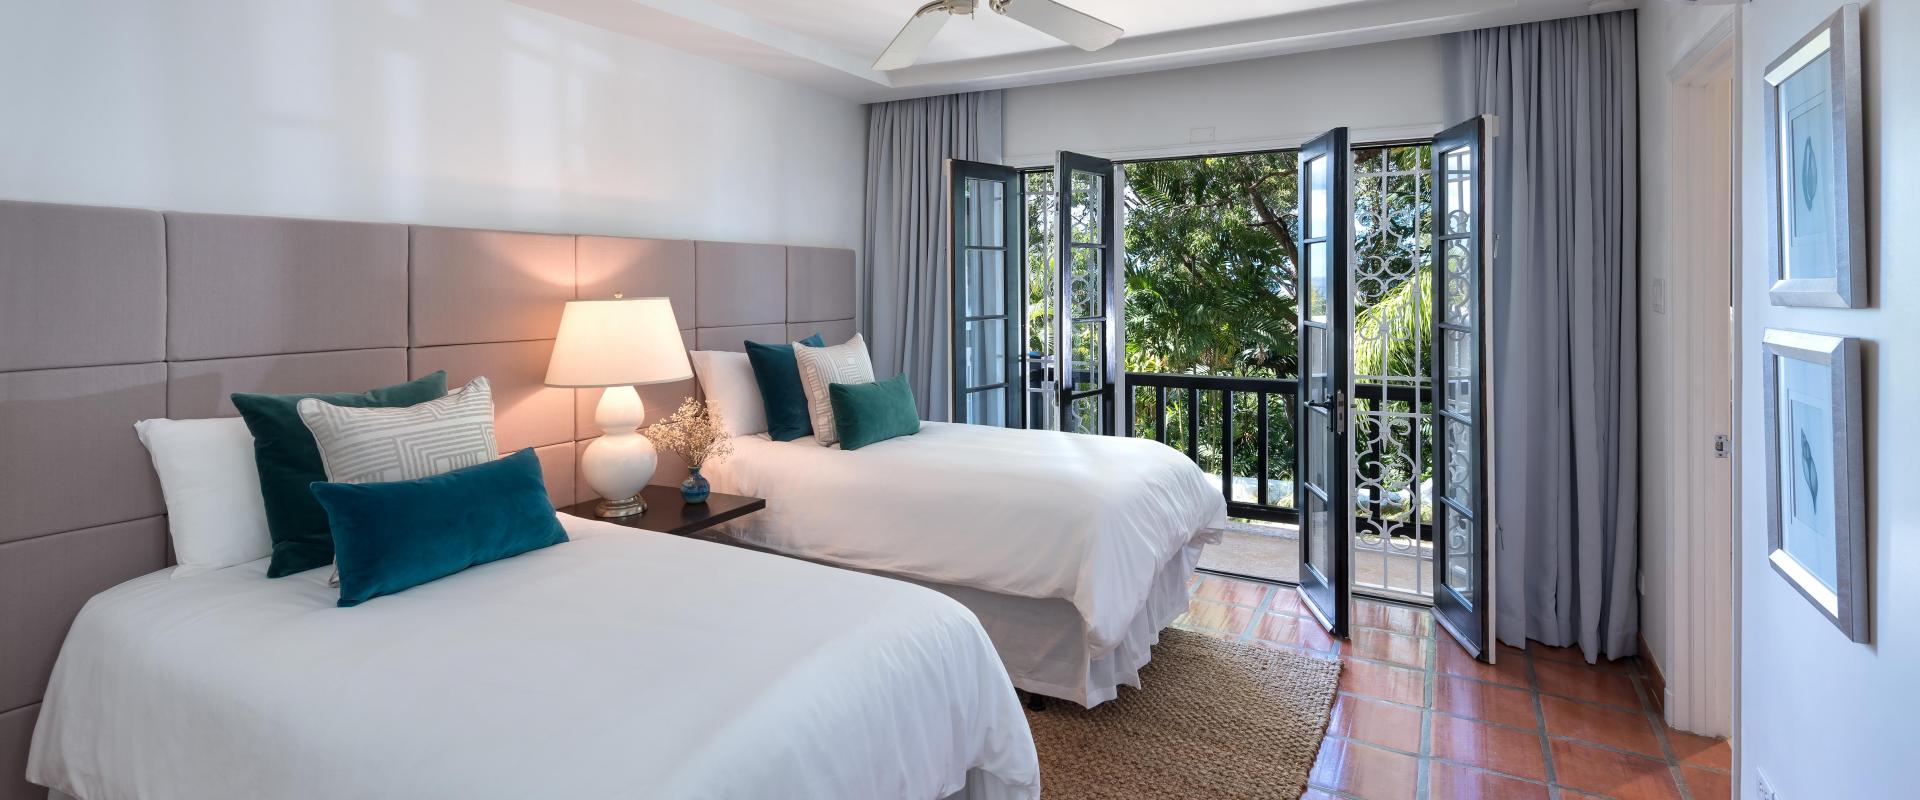 Bedroom 3 Elsewhere 10 Bedroom Sandy Lane Villa For Rent In Barbados 